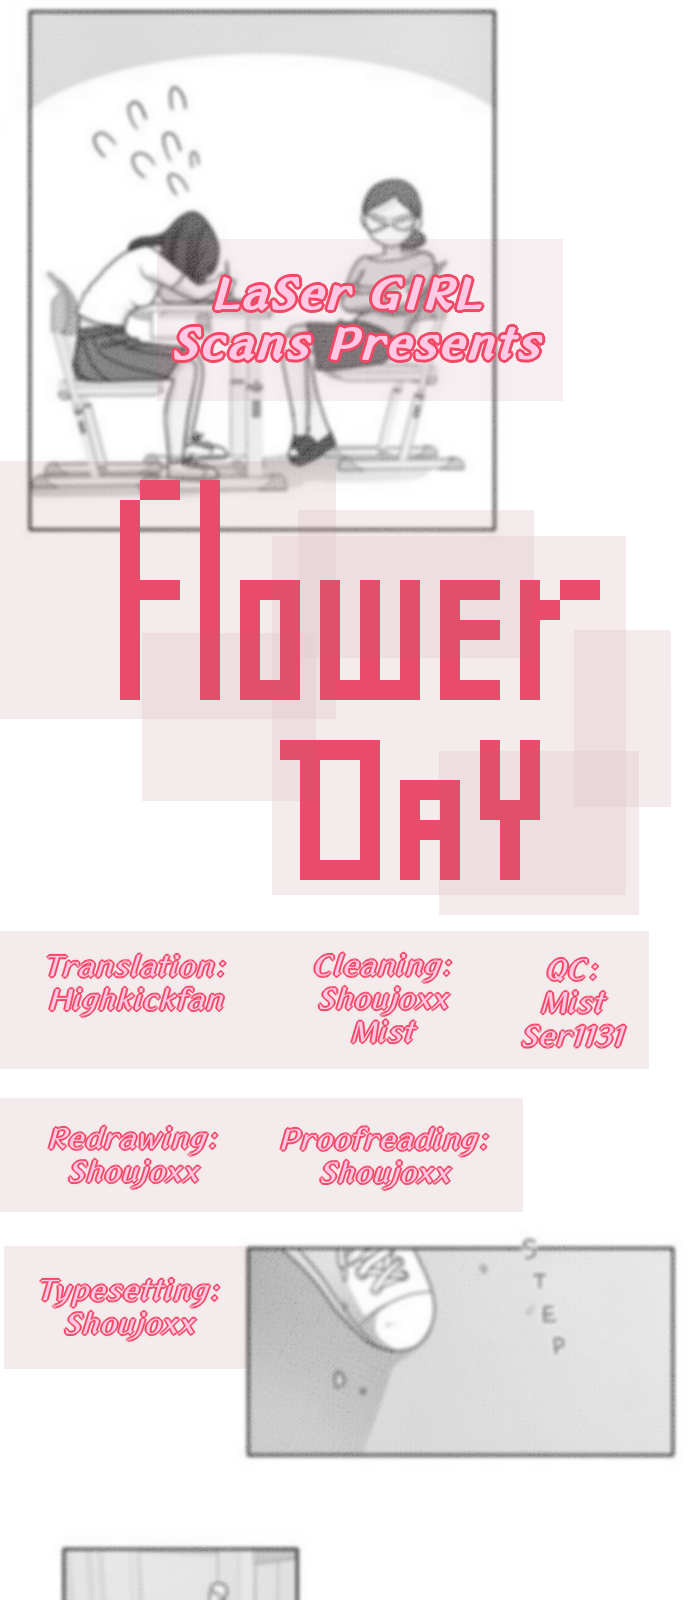 Baca Flower Day Chapter 3  - GudangKomik